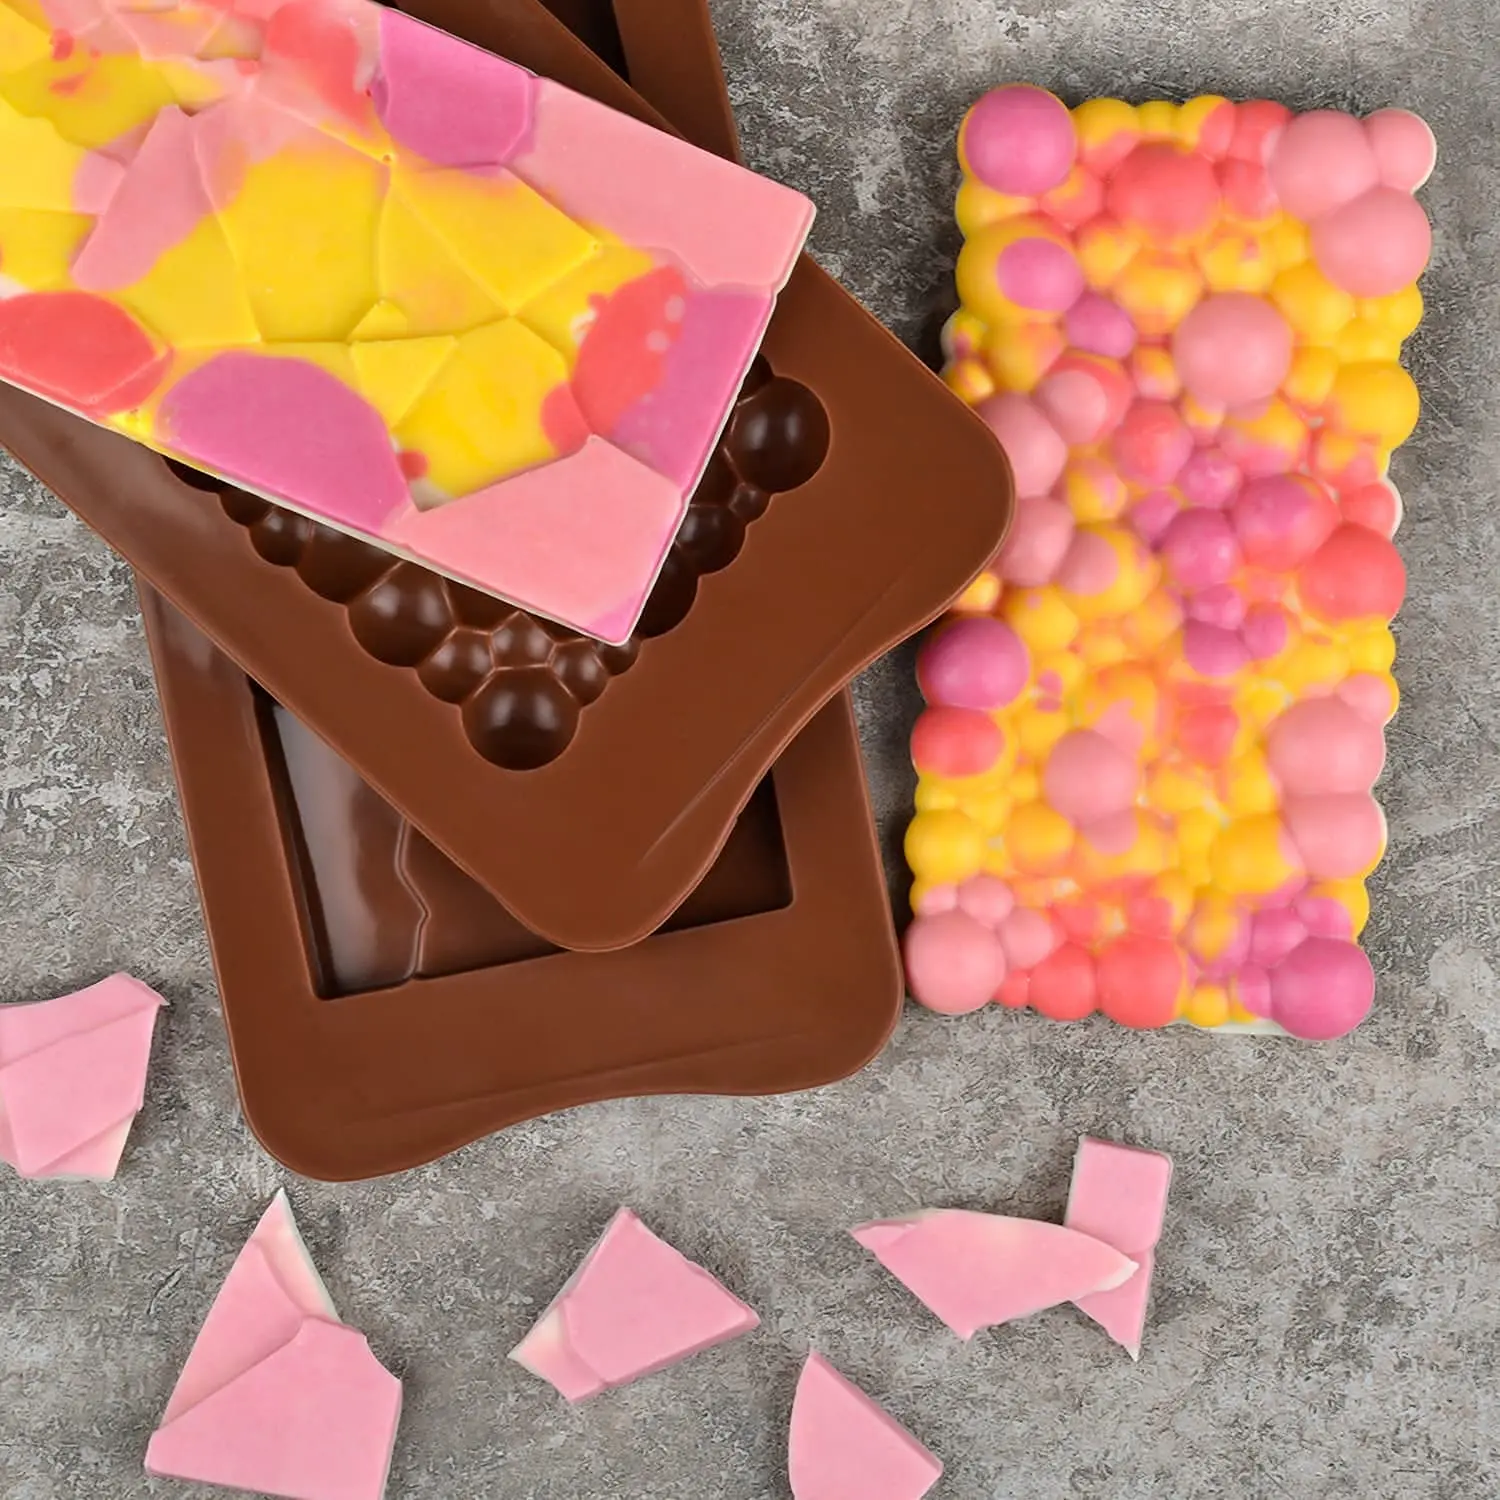 https://ae01.alicdn.com/kf/H5962693d9a0c4009ba5bc992de932b9bn/New-Silicone-Chocolate-Bar-Mold-Rectangle-Break-Apart-Chocolate-Molds-Candy-Maker-Tray-Wax-Melt-Baking.jpg